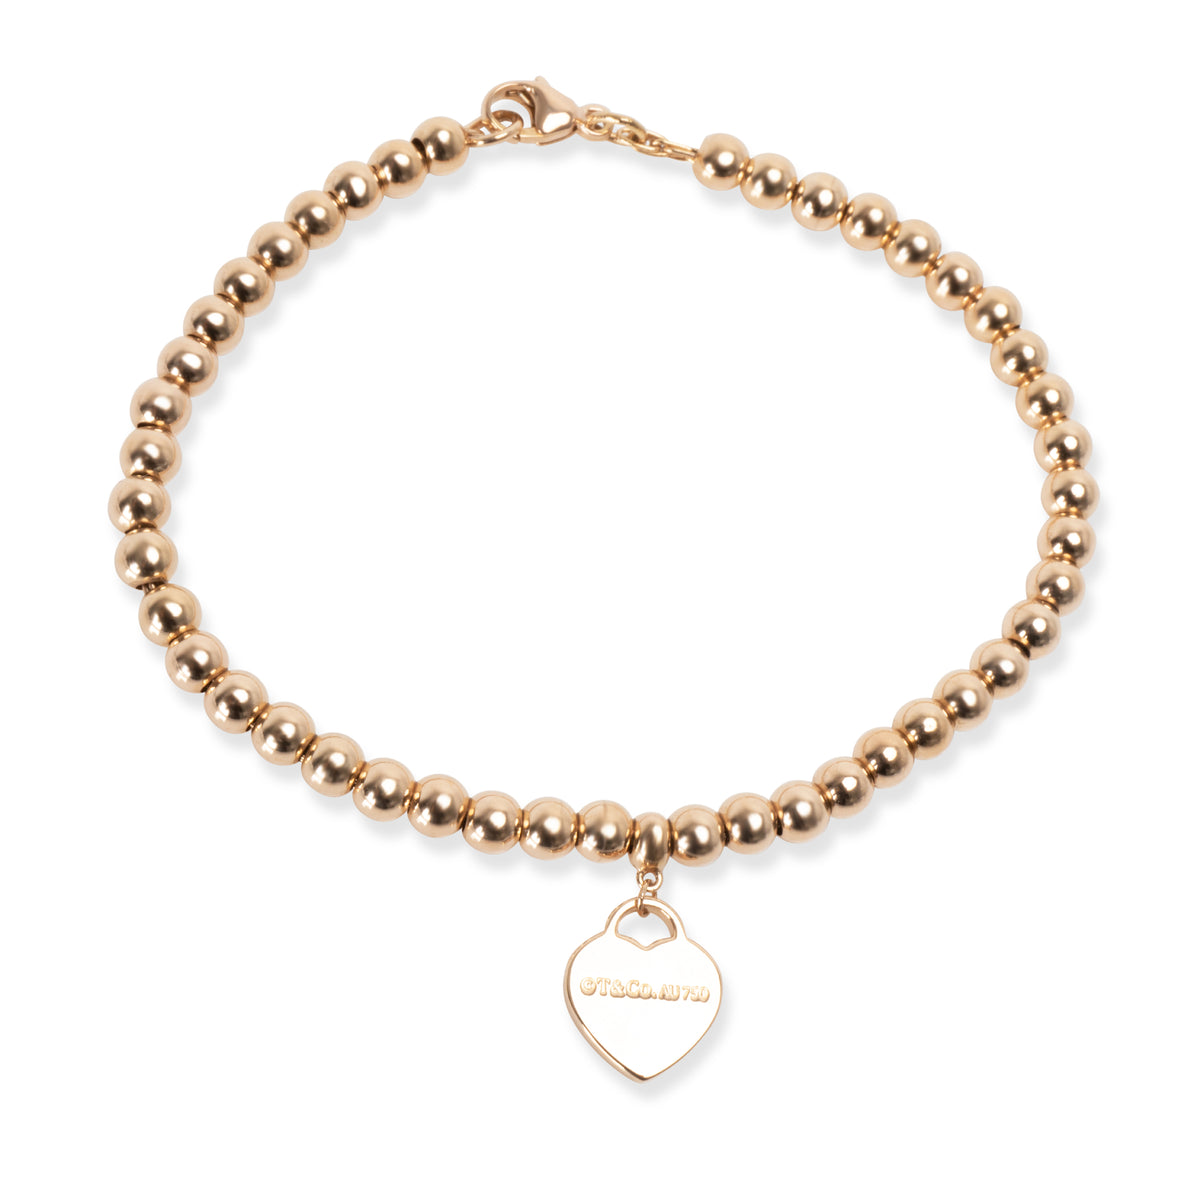 Tiffany & Co. Return to Tiffany Mini Heart Tag Bead Bracelet in 18k Rose Gold